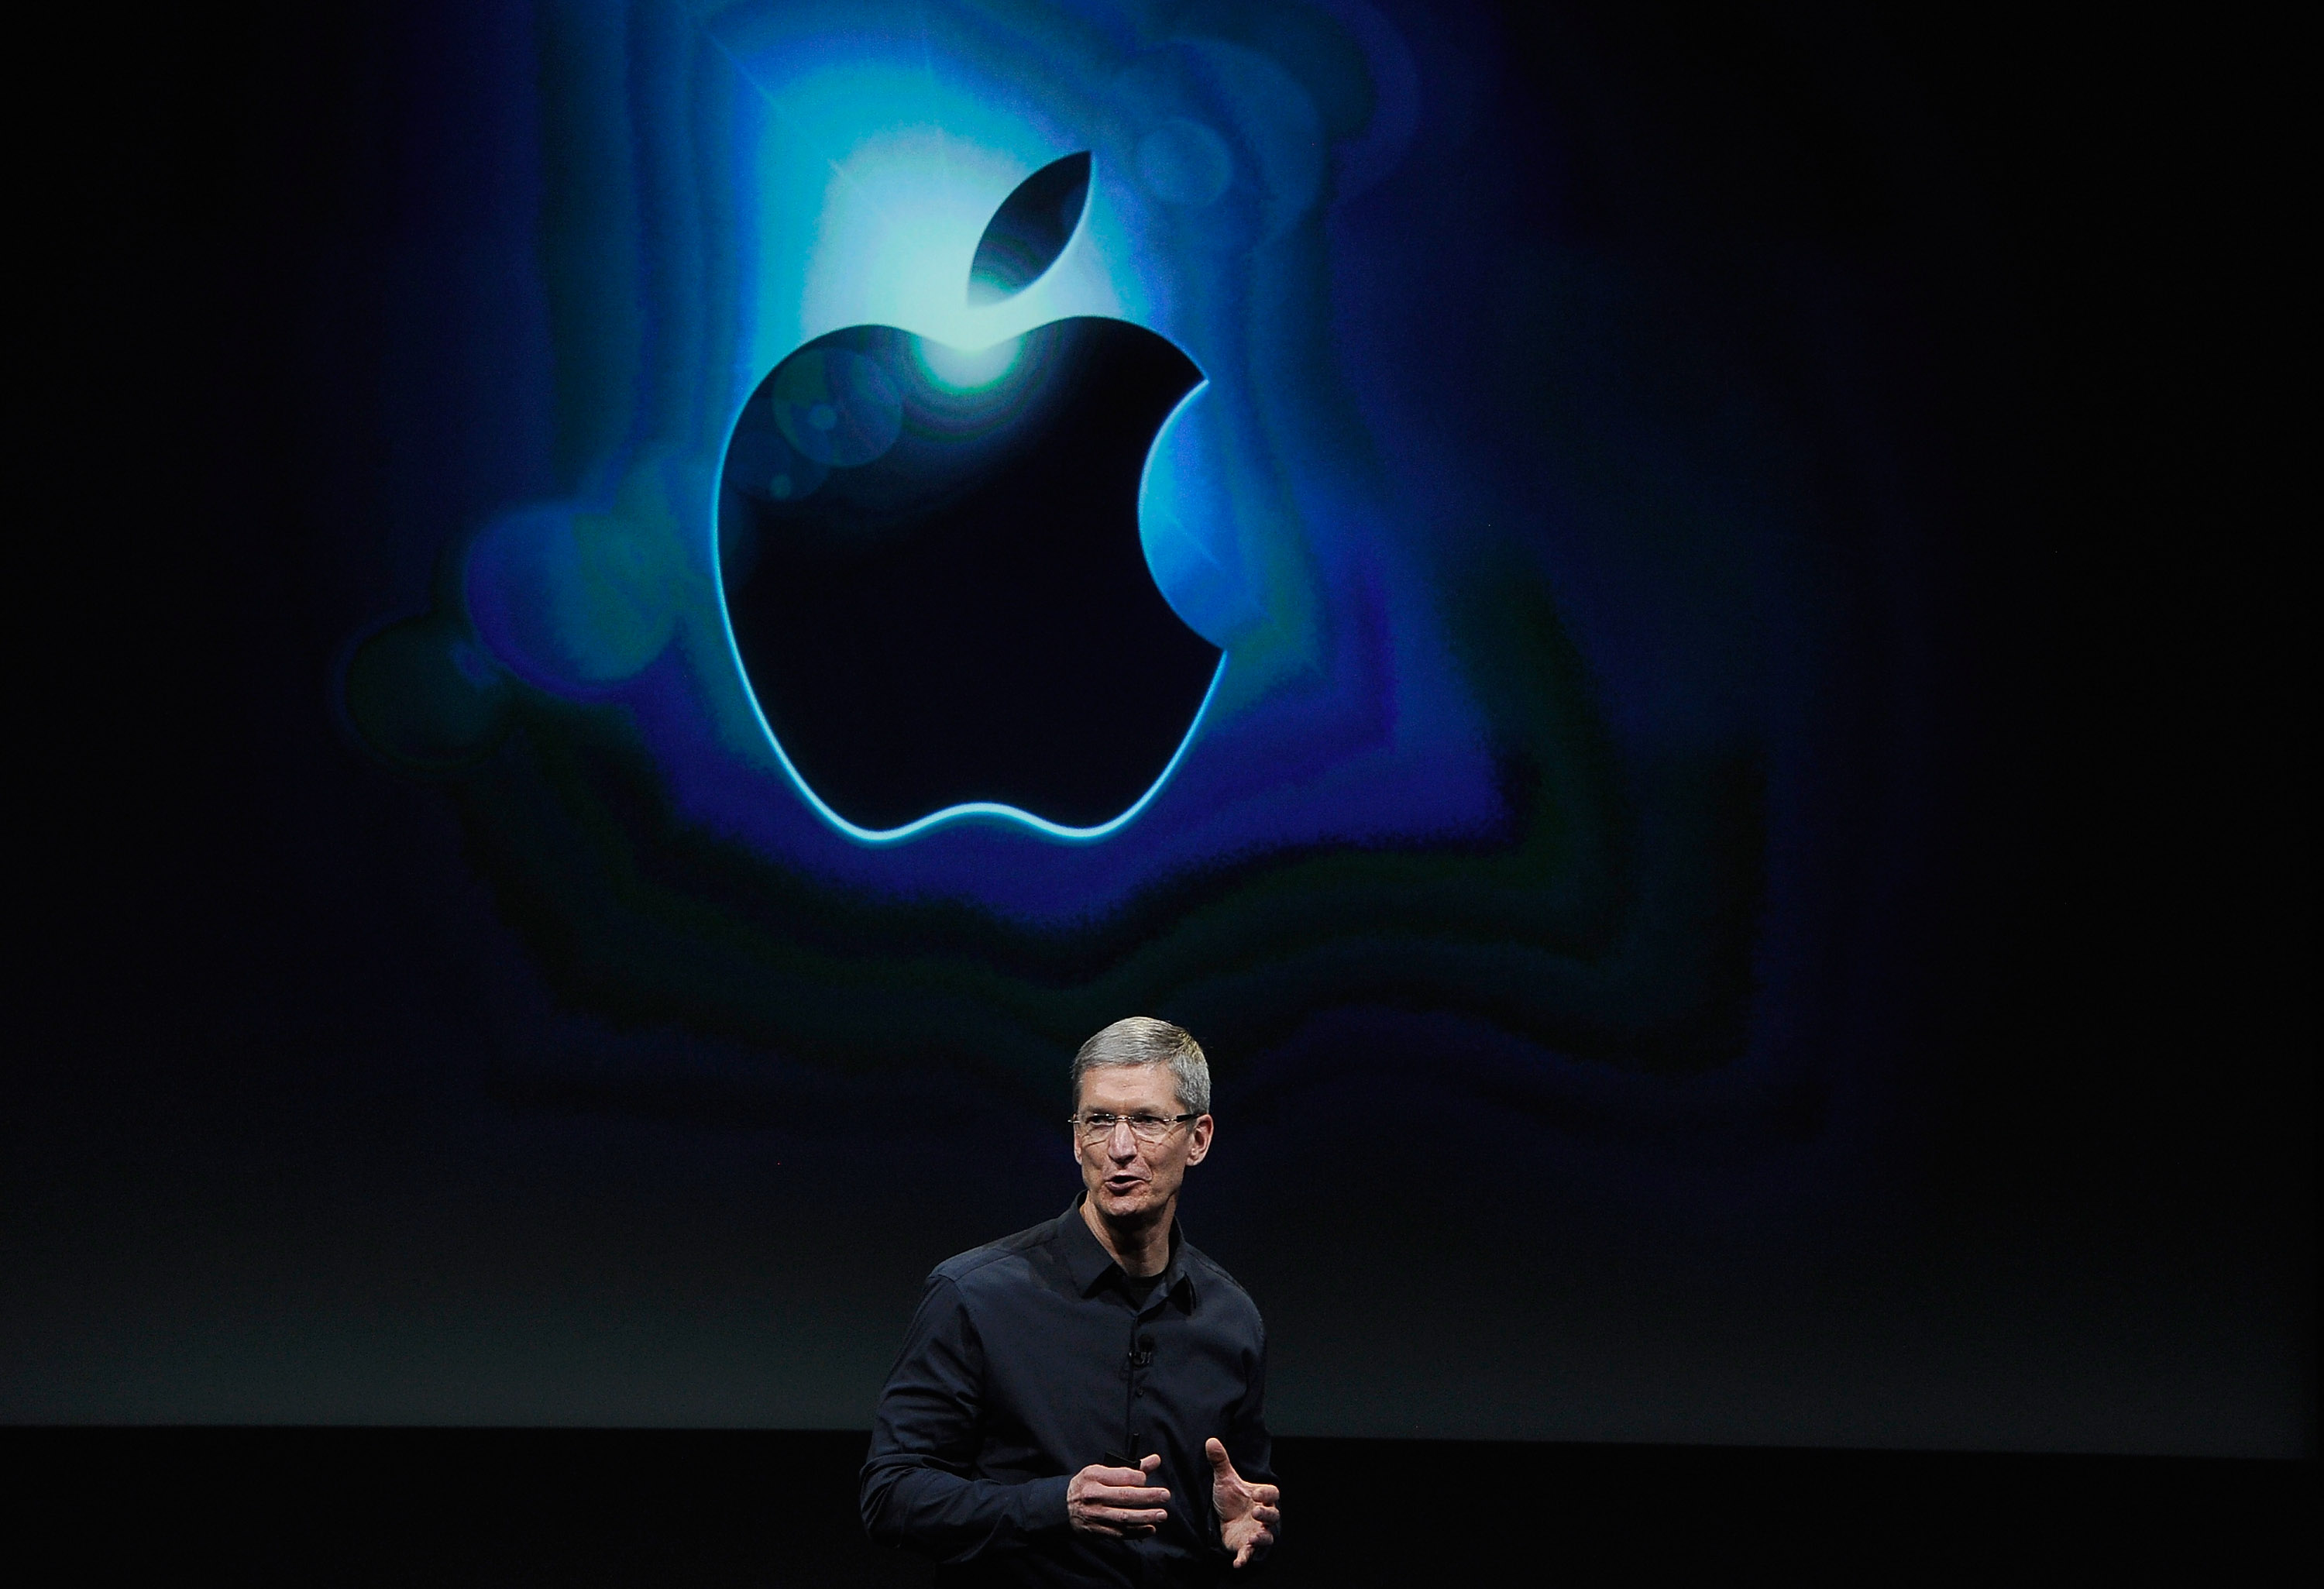 Apple е оптимизирала над 275 хиляди приложения за iPad, похвали се Тим Кук